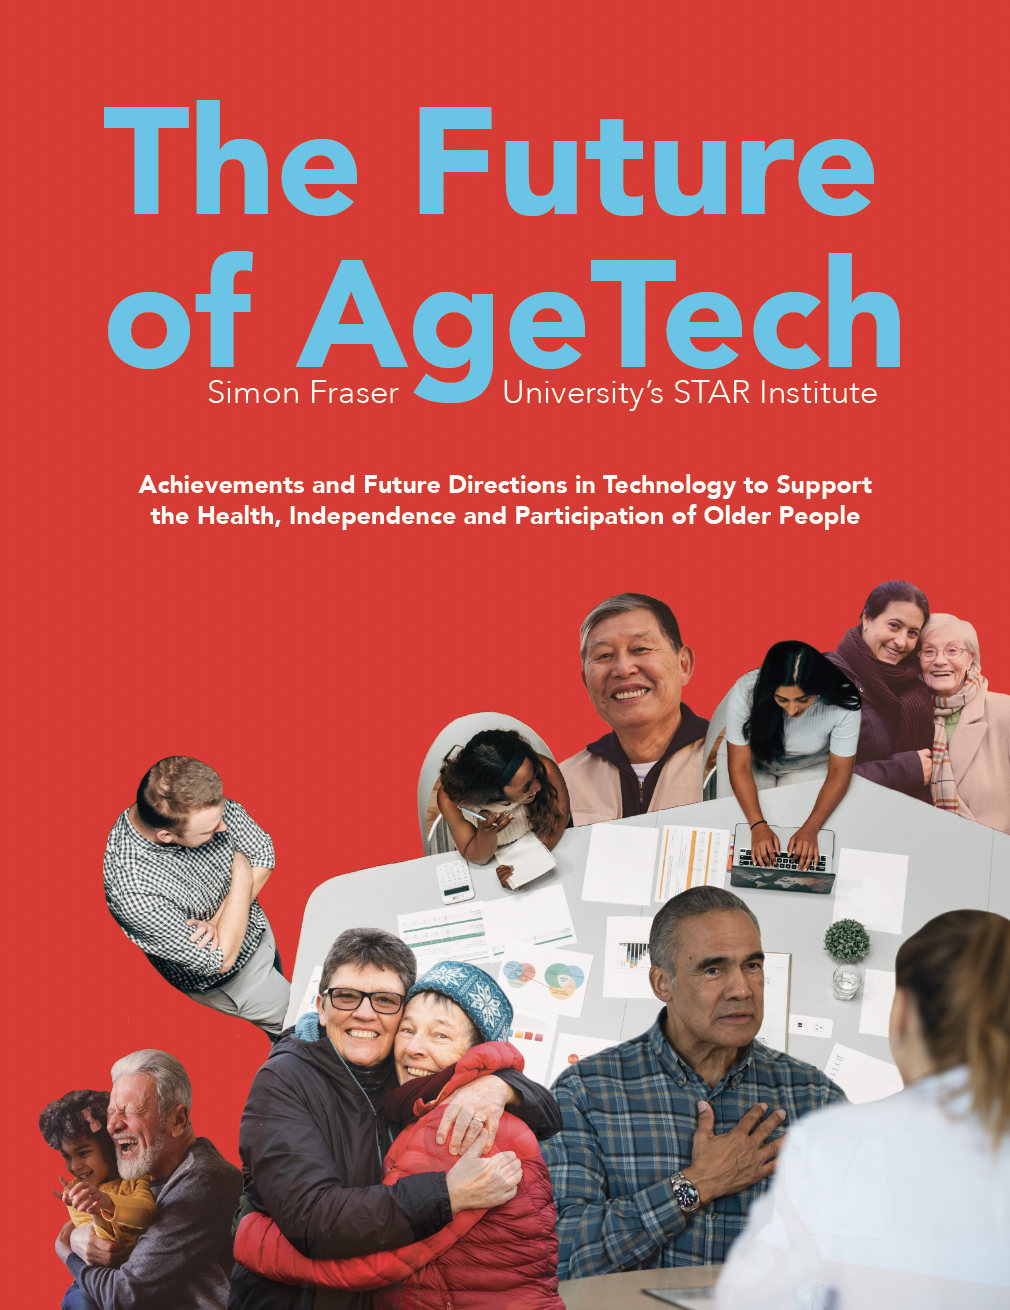 The Future of Age Tech